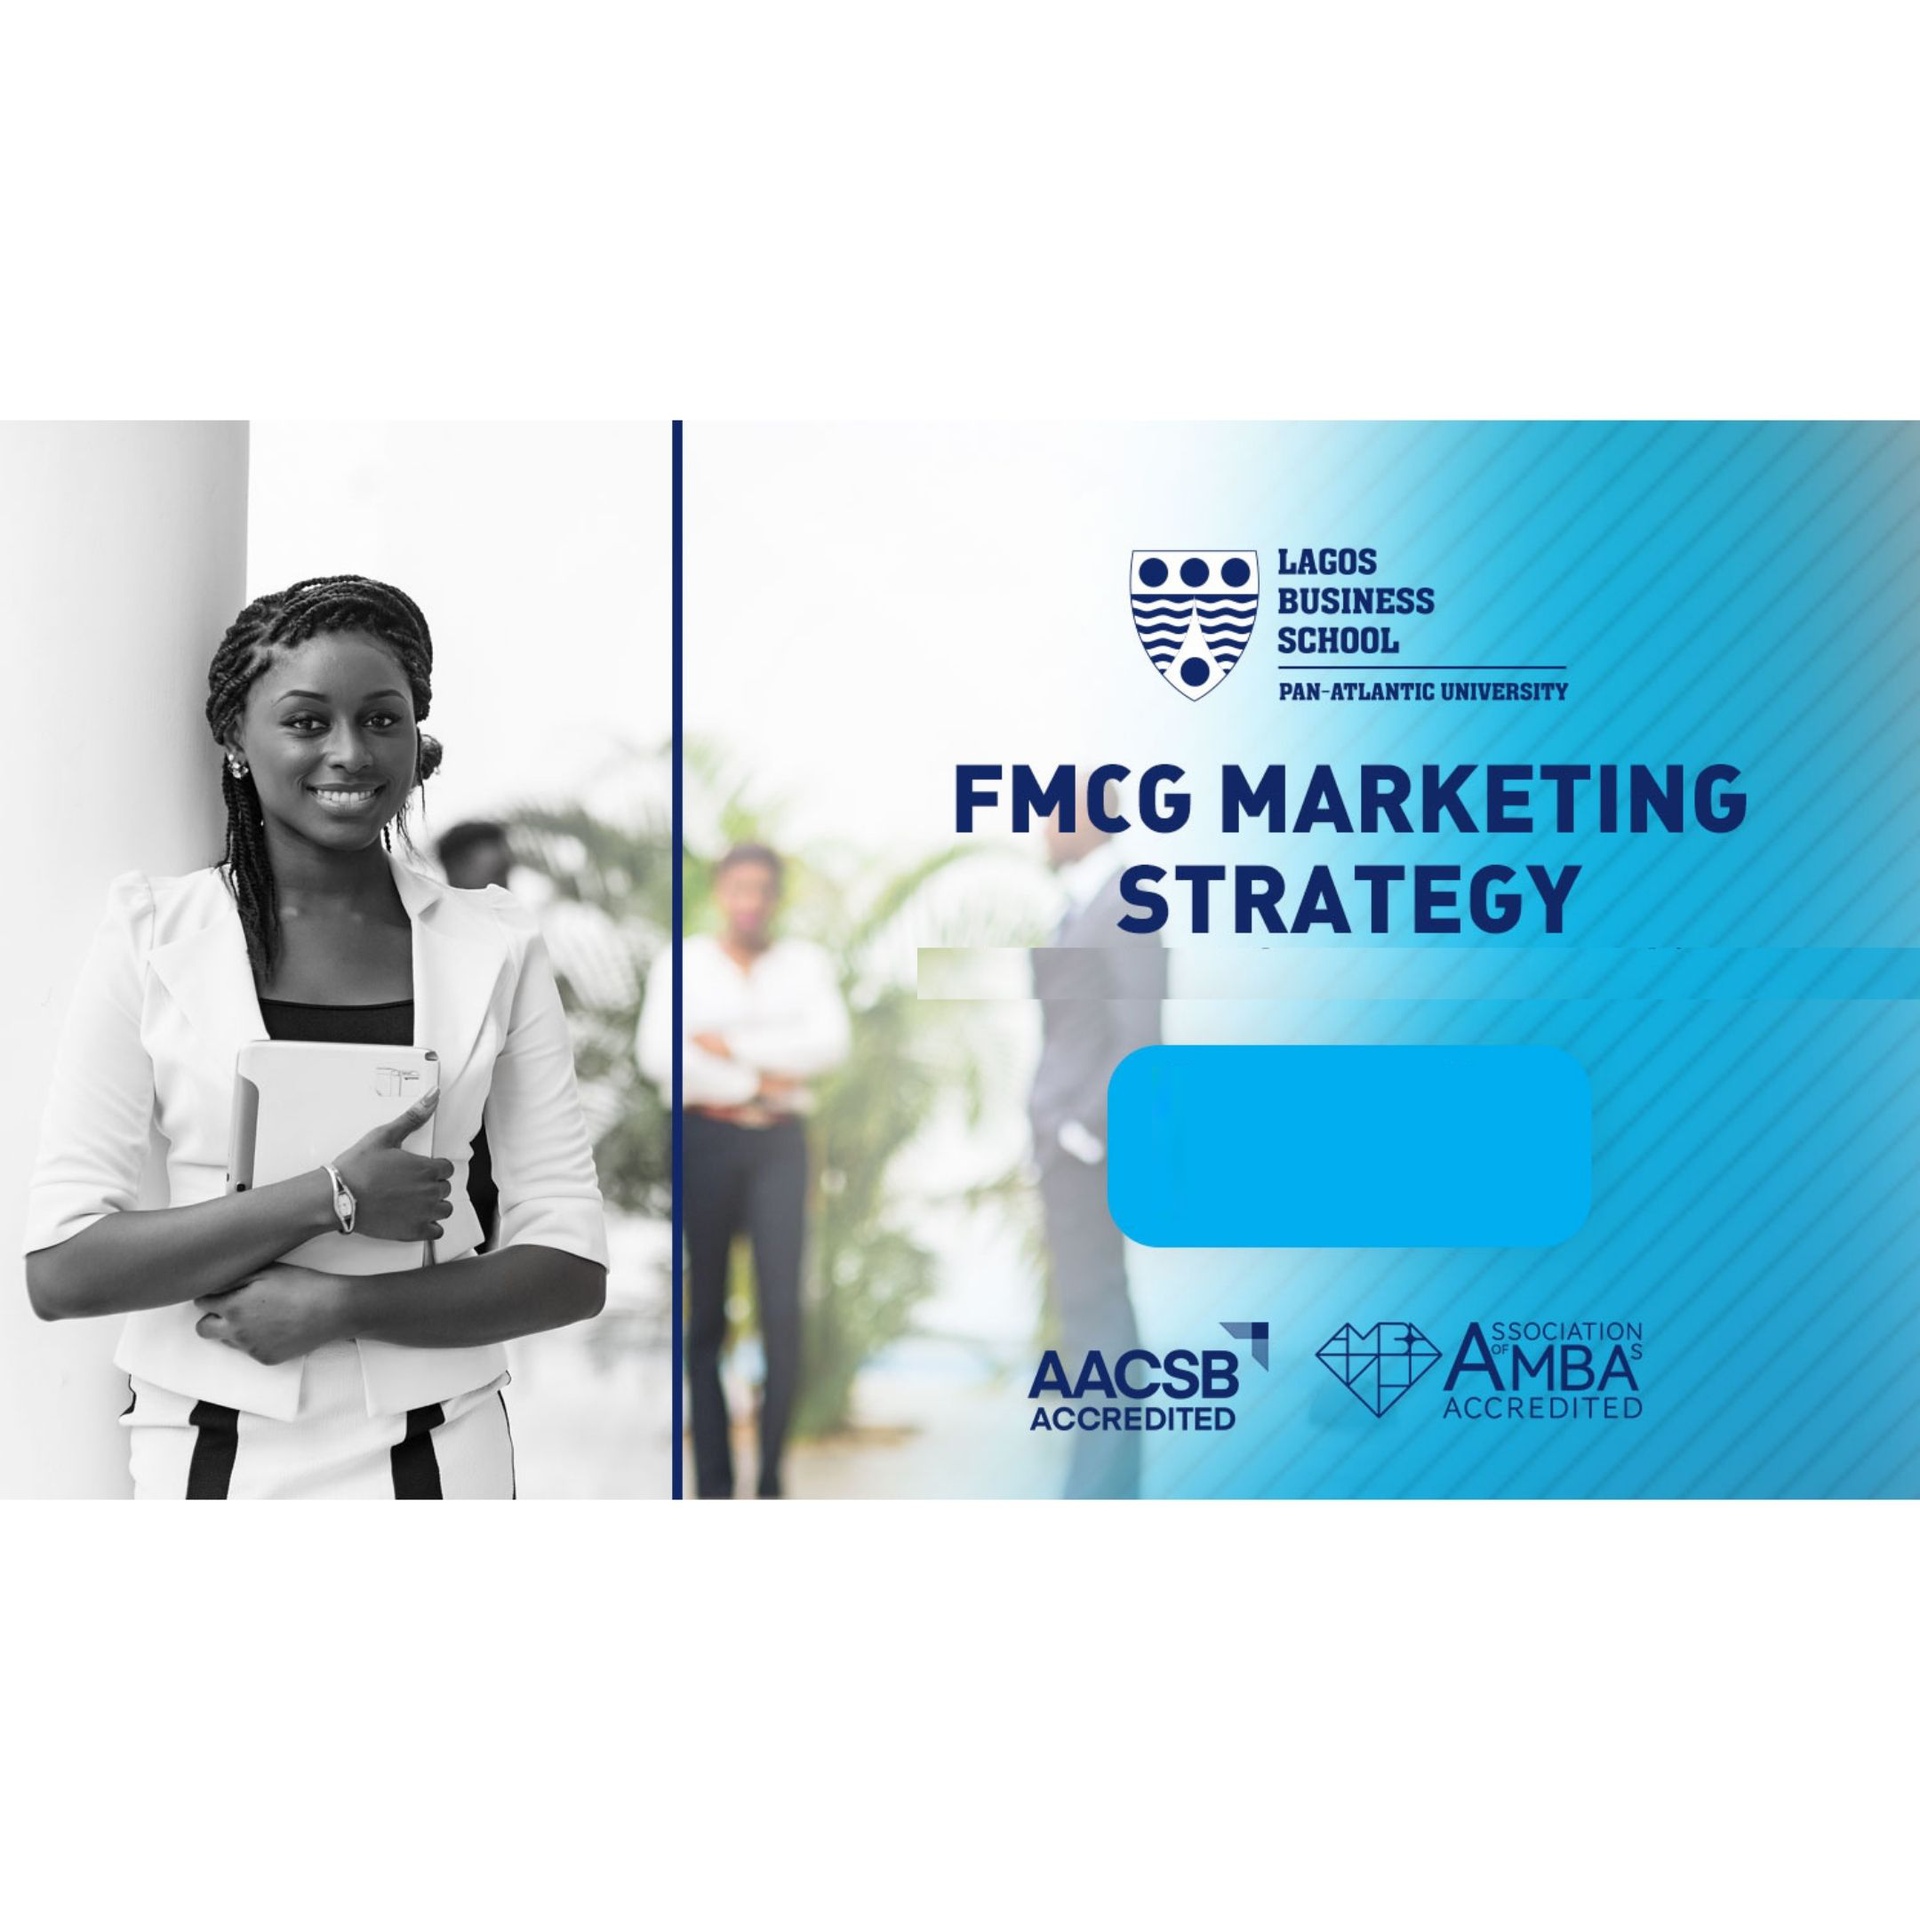 FMCG Marketing Strategy